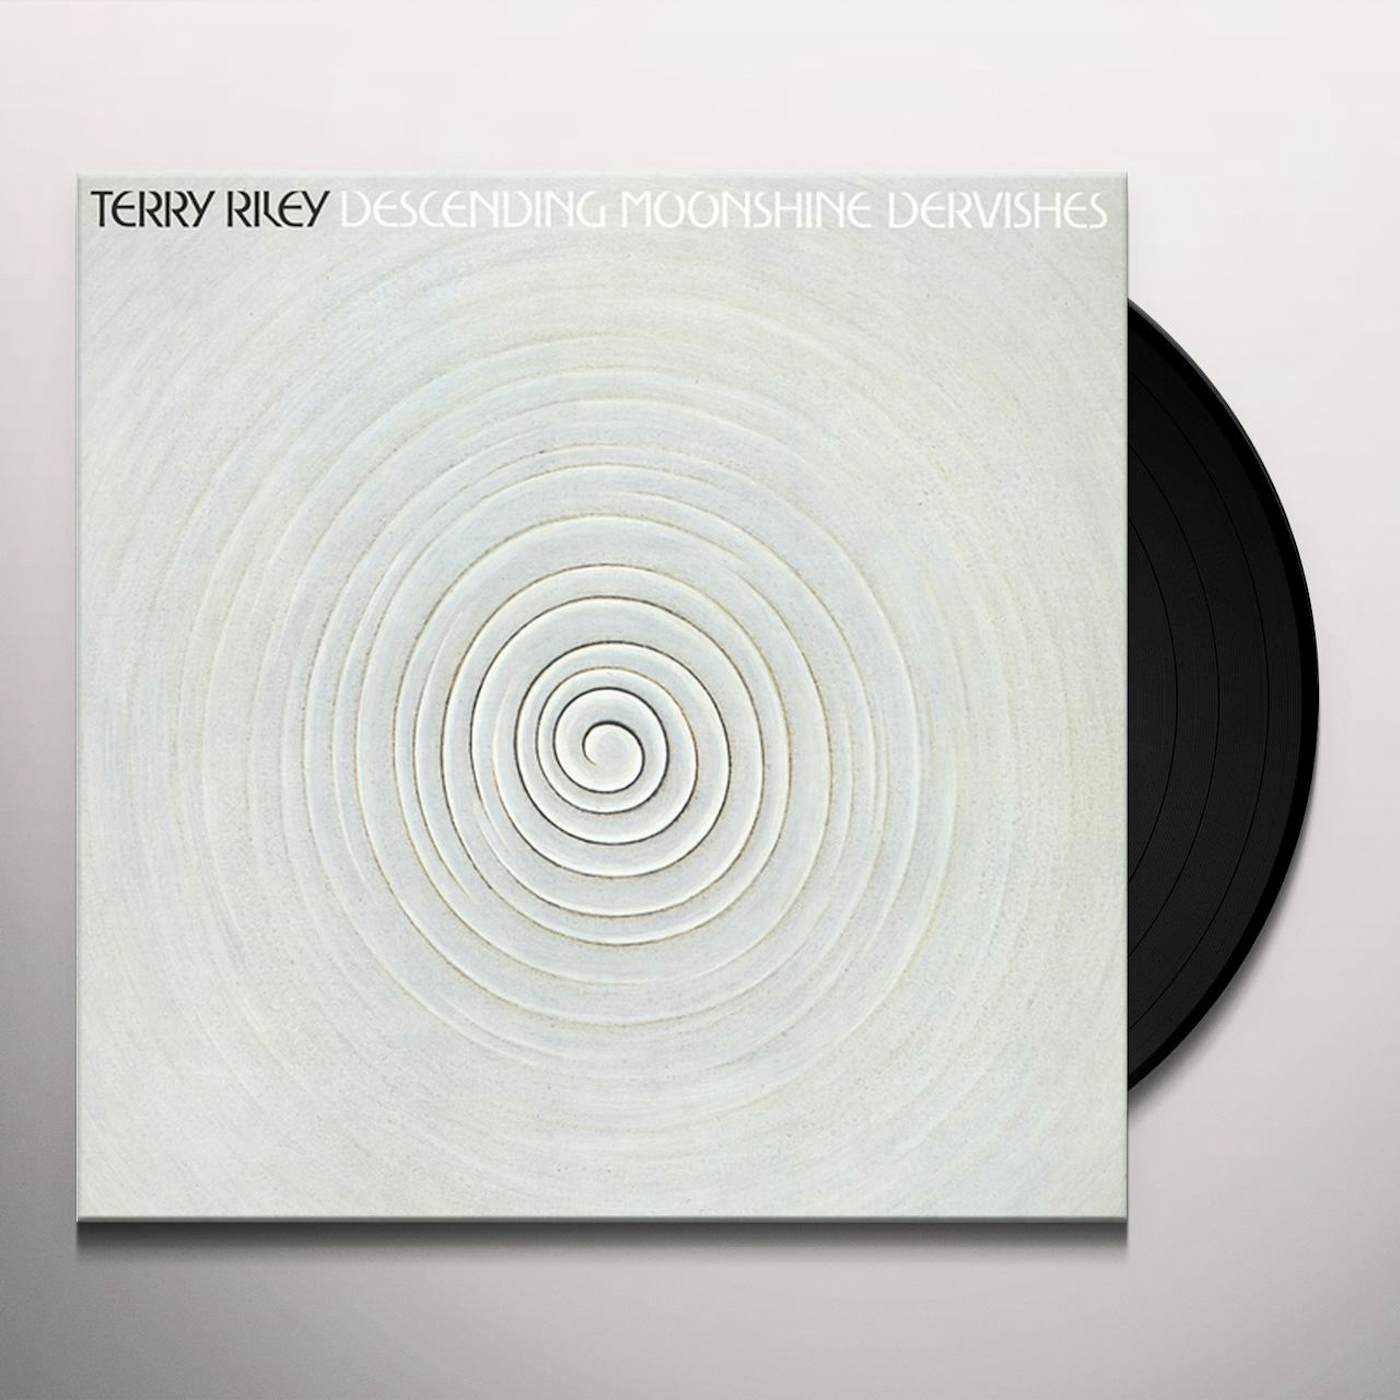 Terry Riley DESCENDING MOONSHINE DERVISHES Vinyl Record